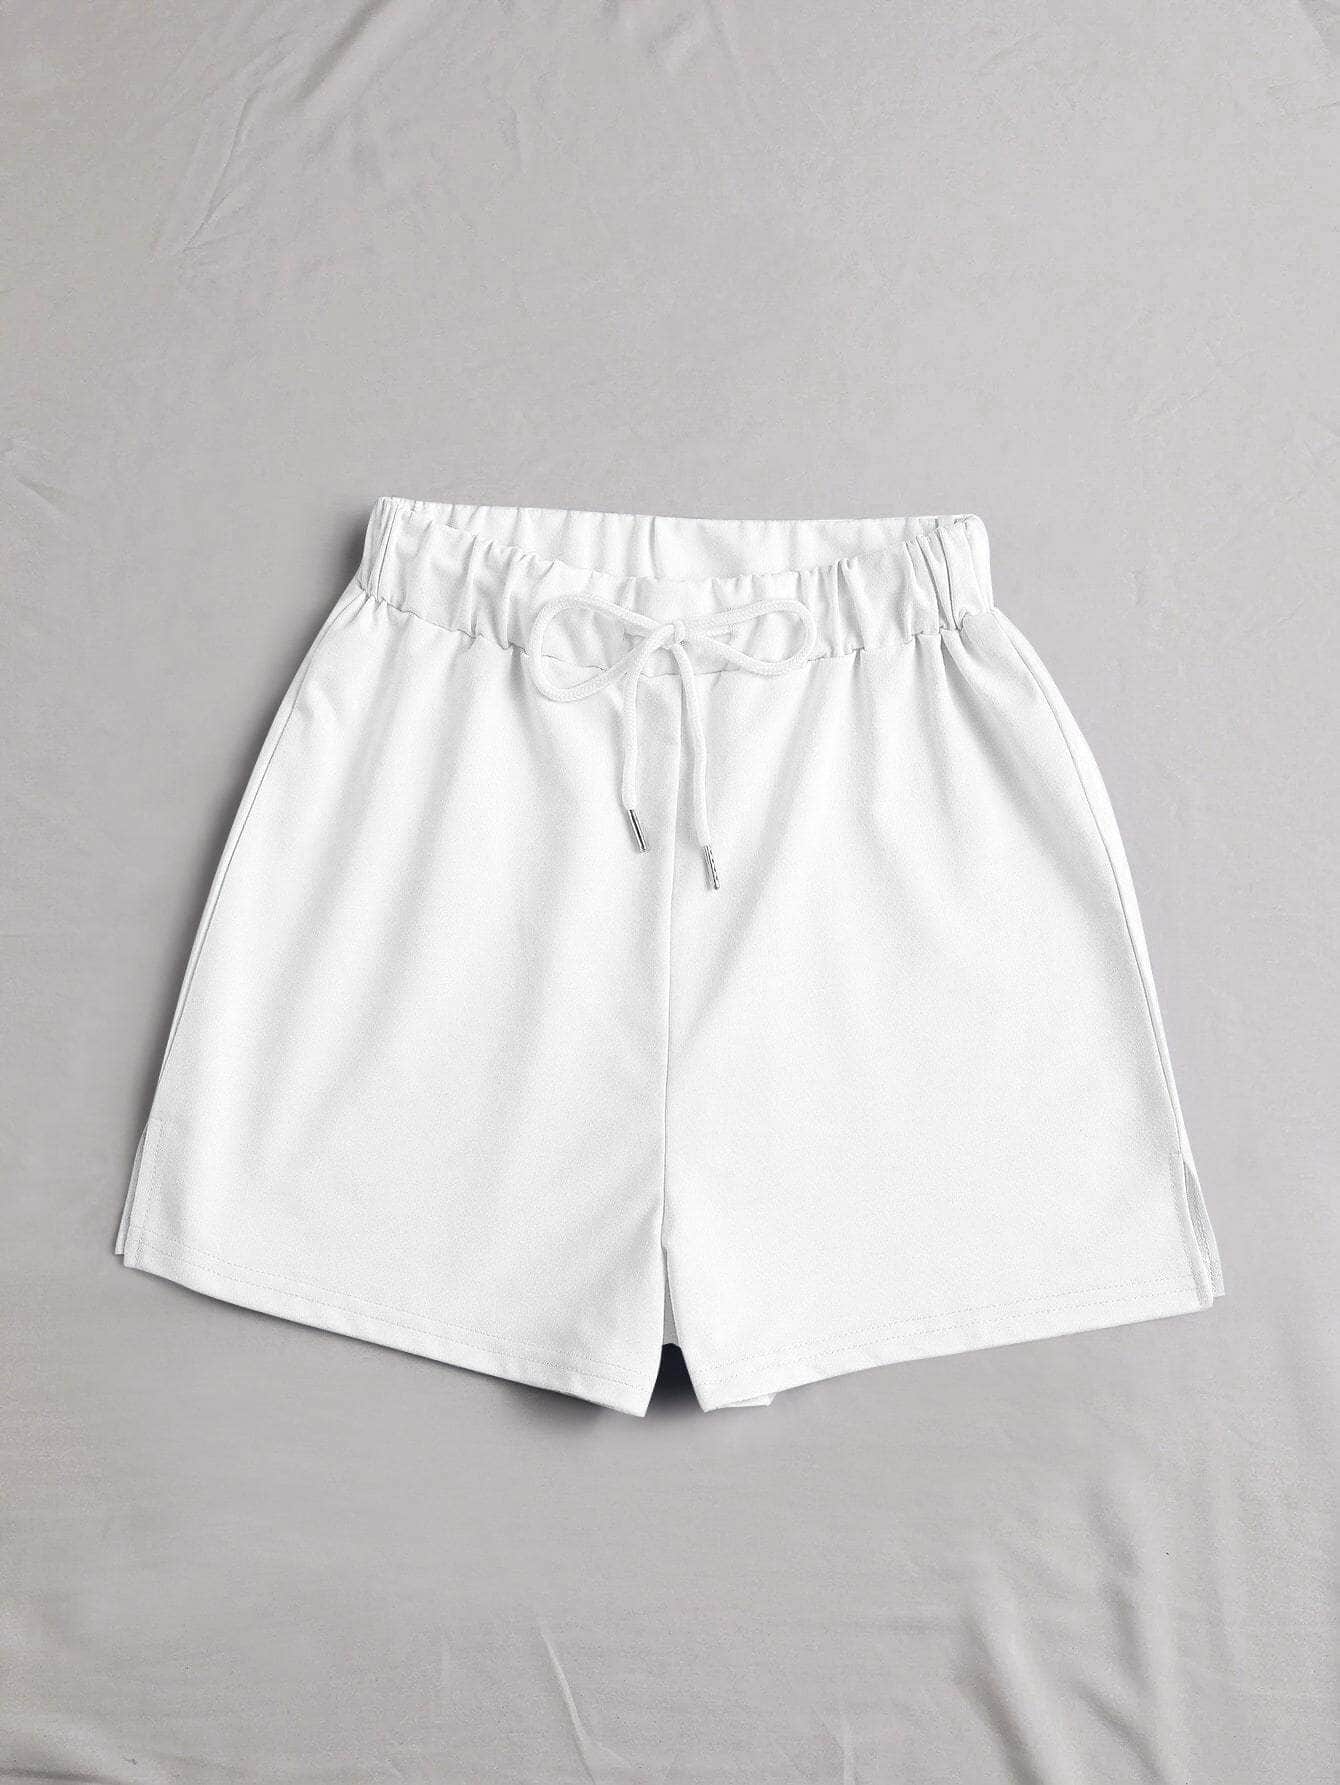 Blanco / L Shorts Nudo Liso Casual